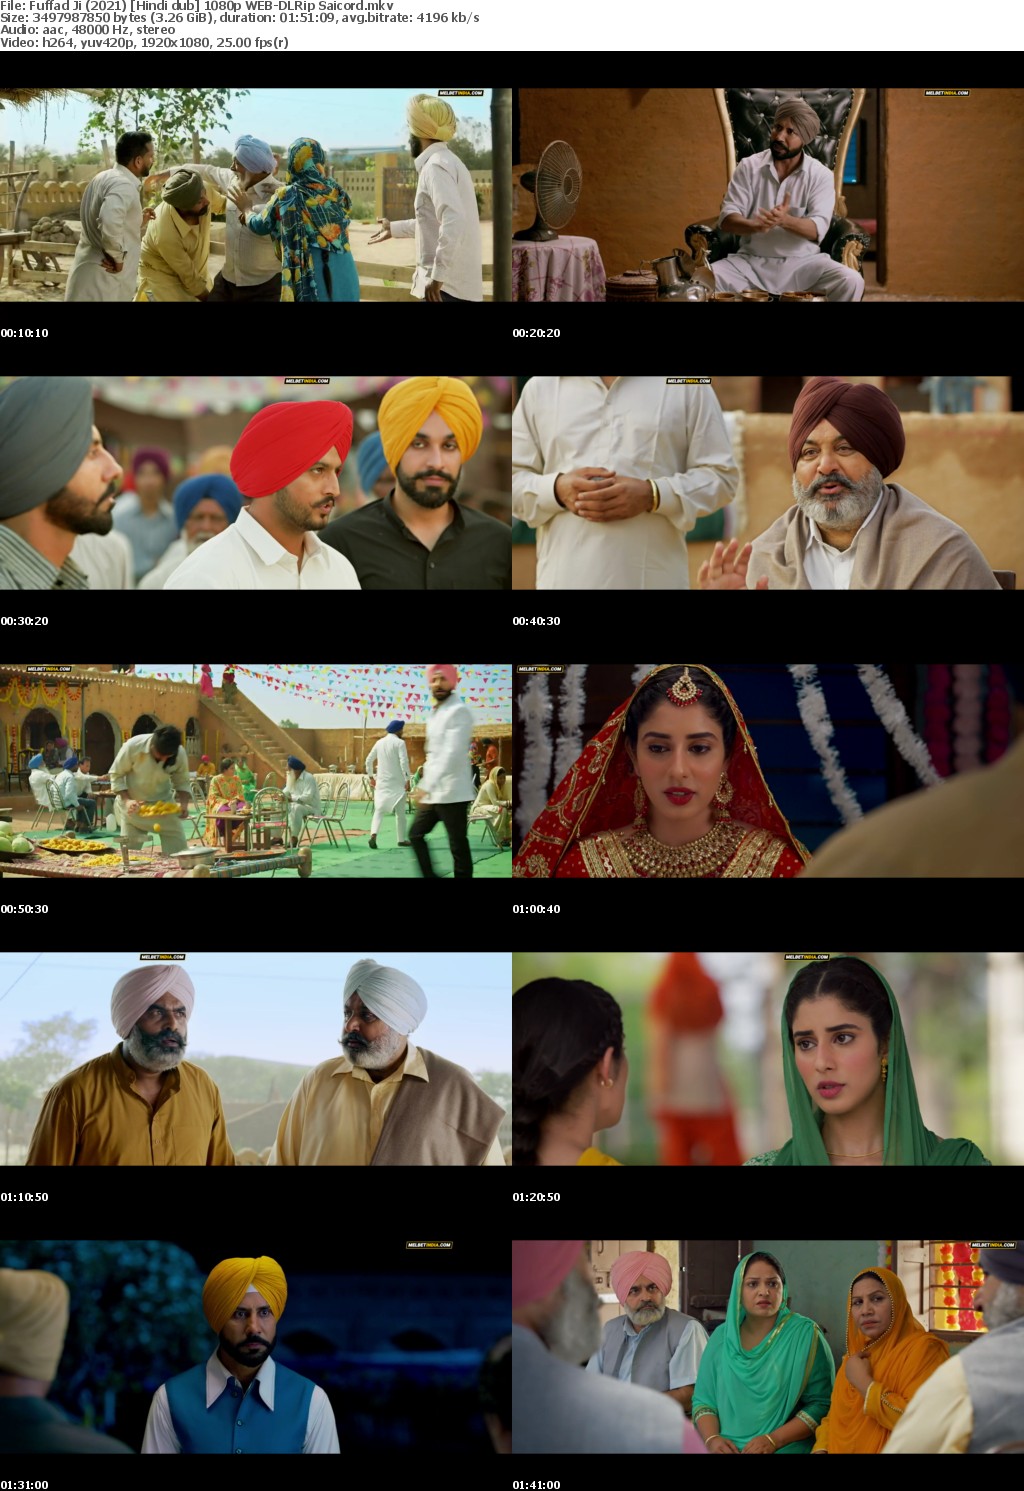 Fuffad Ji (2021) Hindi Dub 1080p WEB-DLRip Saicord